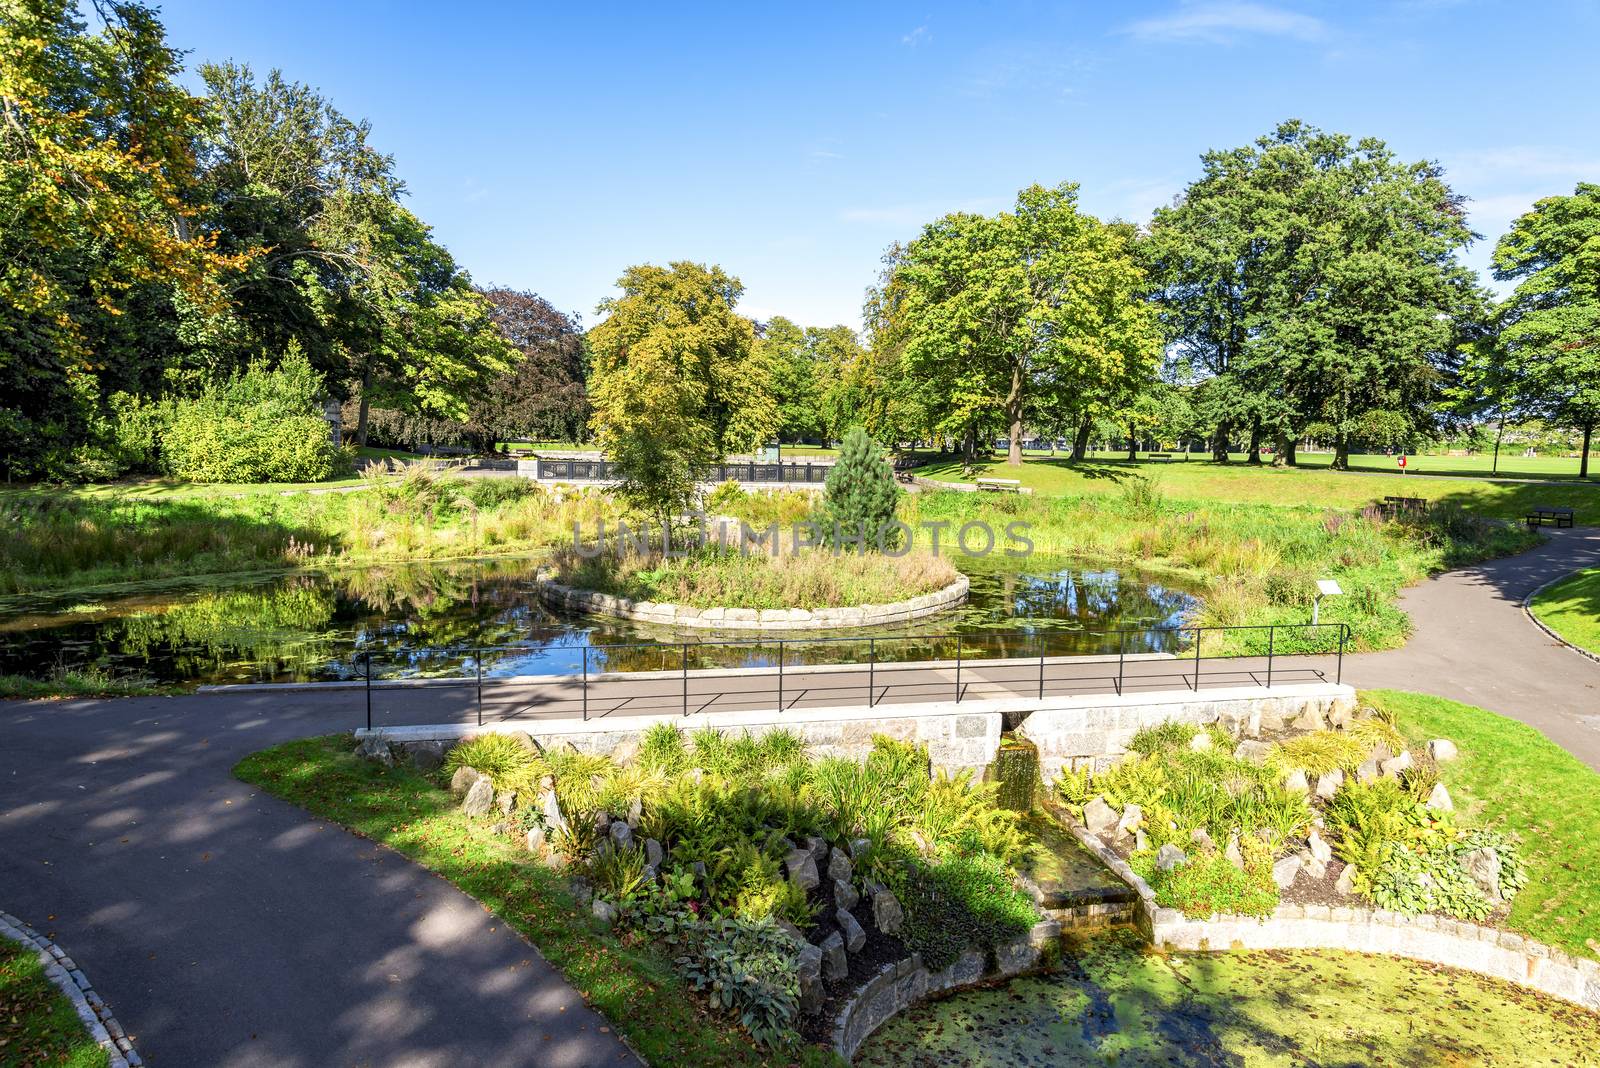 Area with landscaped design in Duthie park, Aberdeen, Scotland by anastasstyles